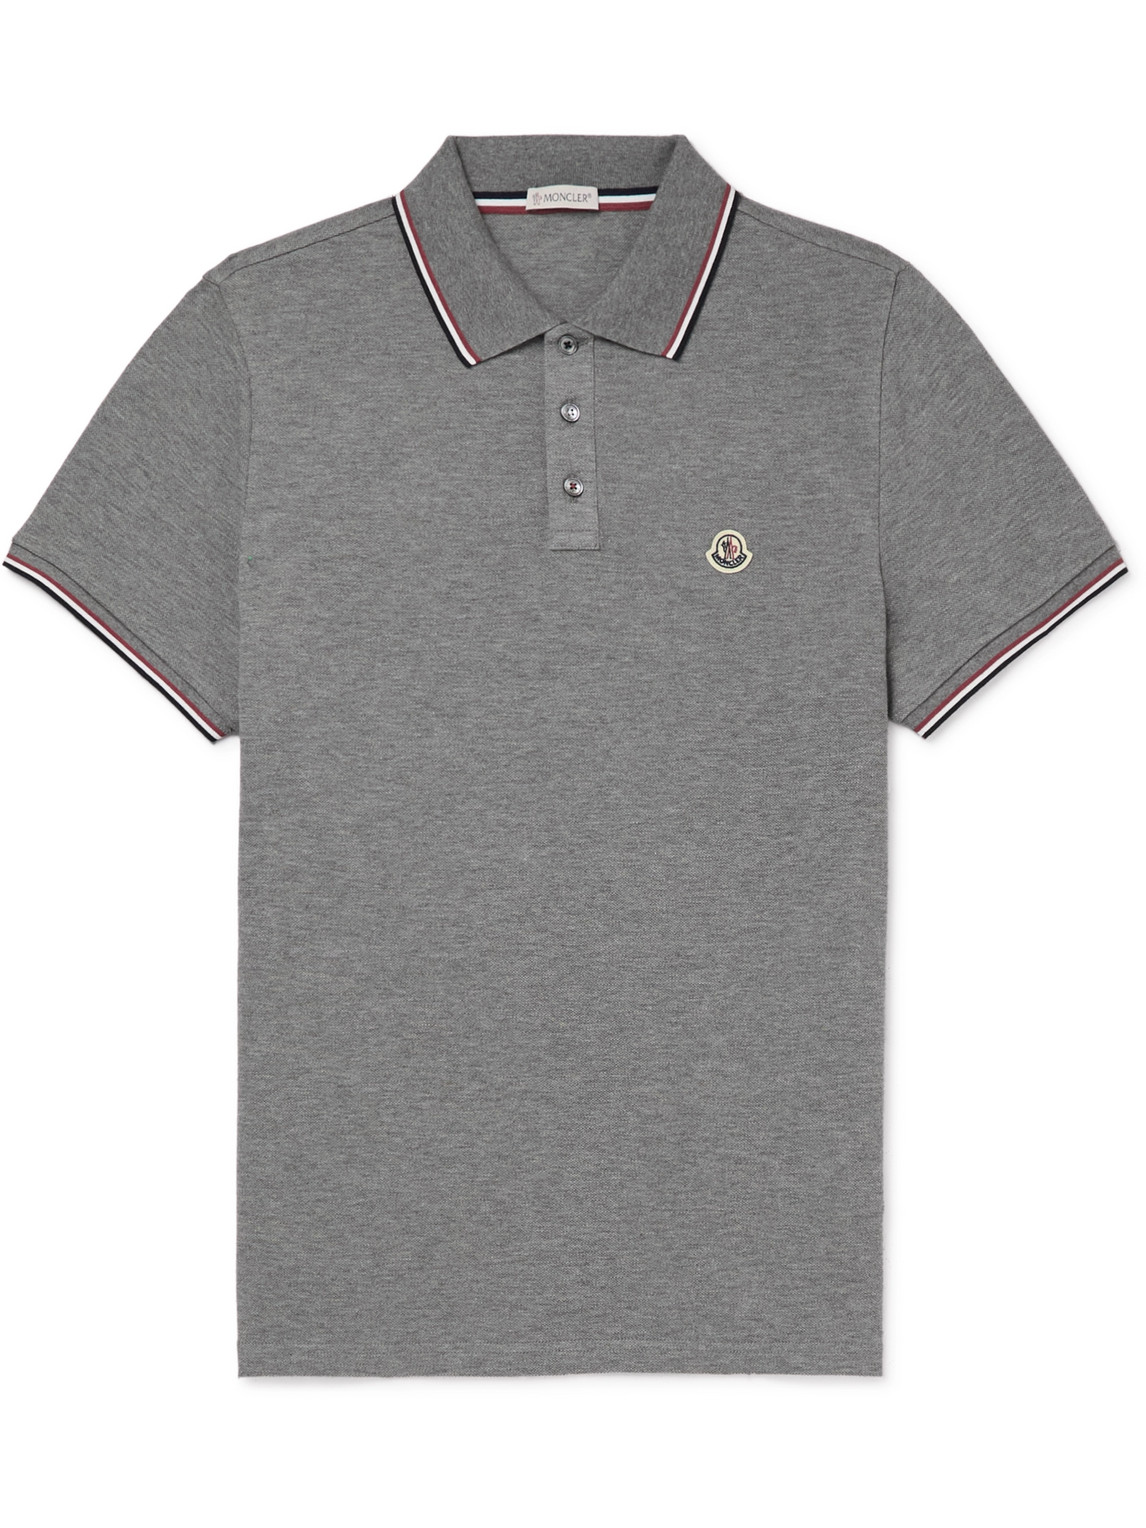 Moncler - Logo-Appliquéd Striped Cotton-Piqué Polo Shirt - Men - Gray - L von Moncler